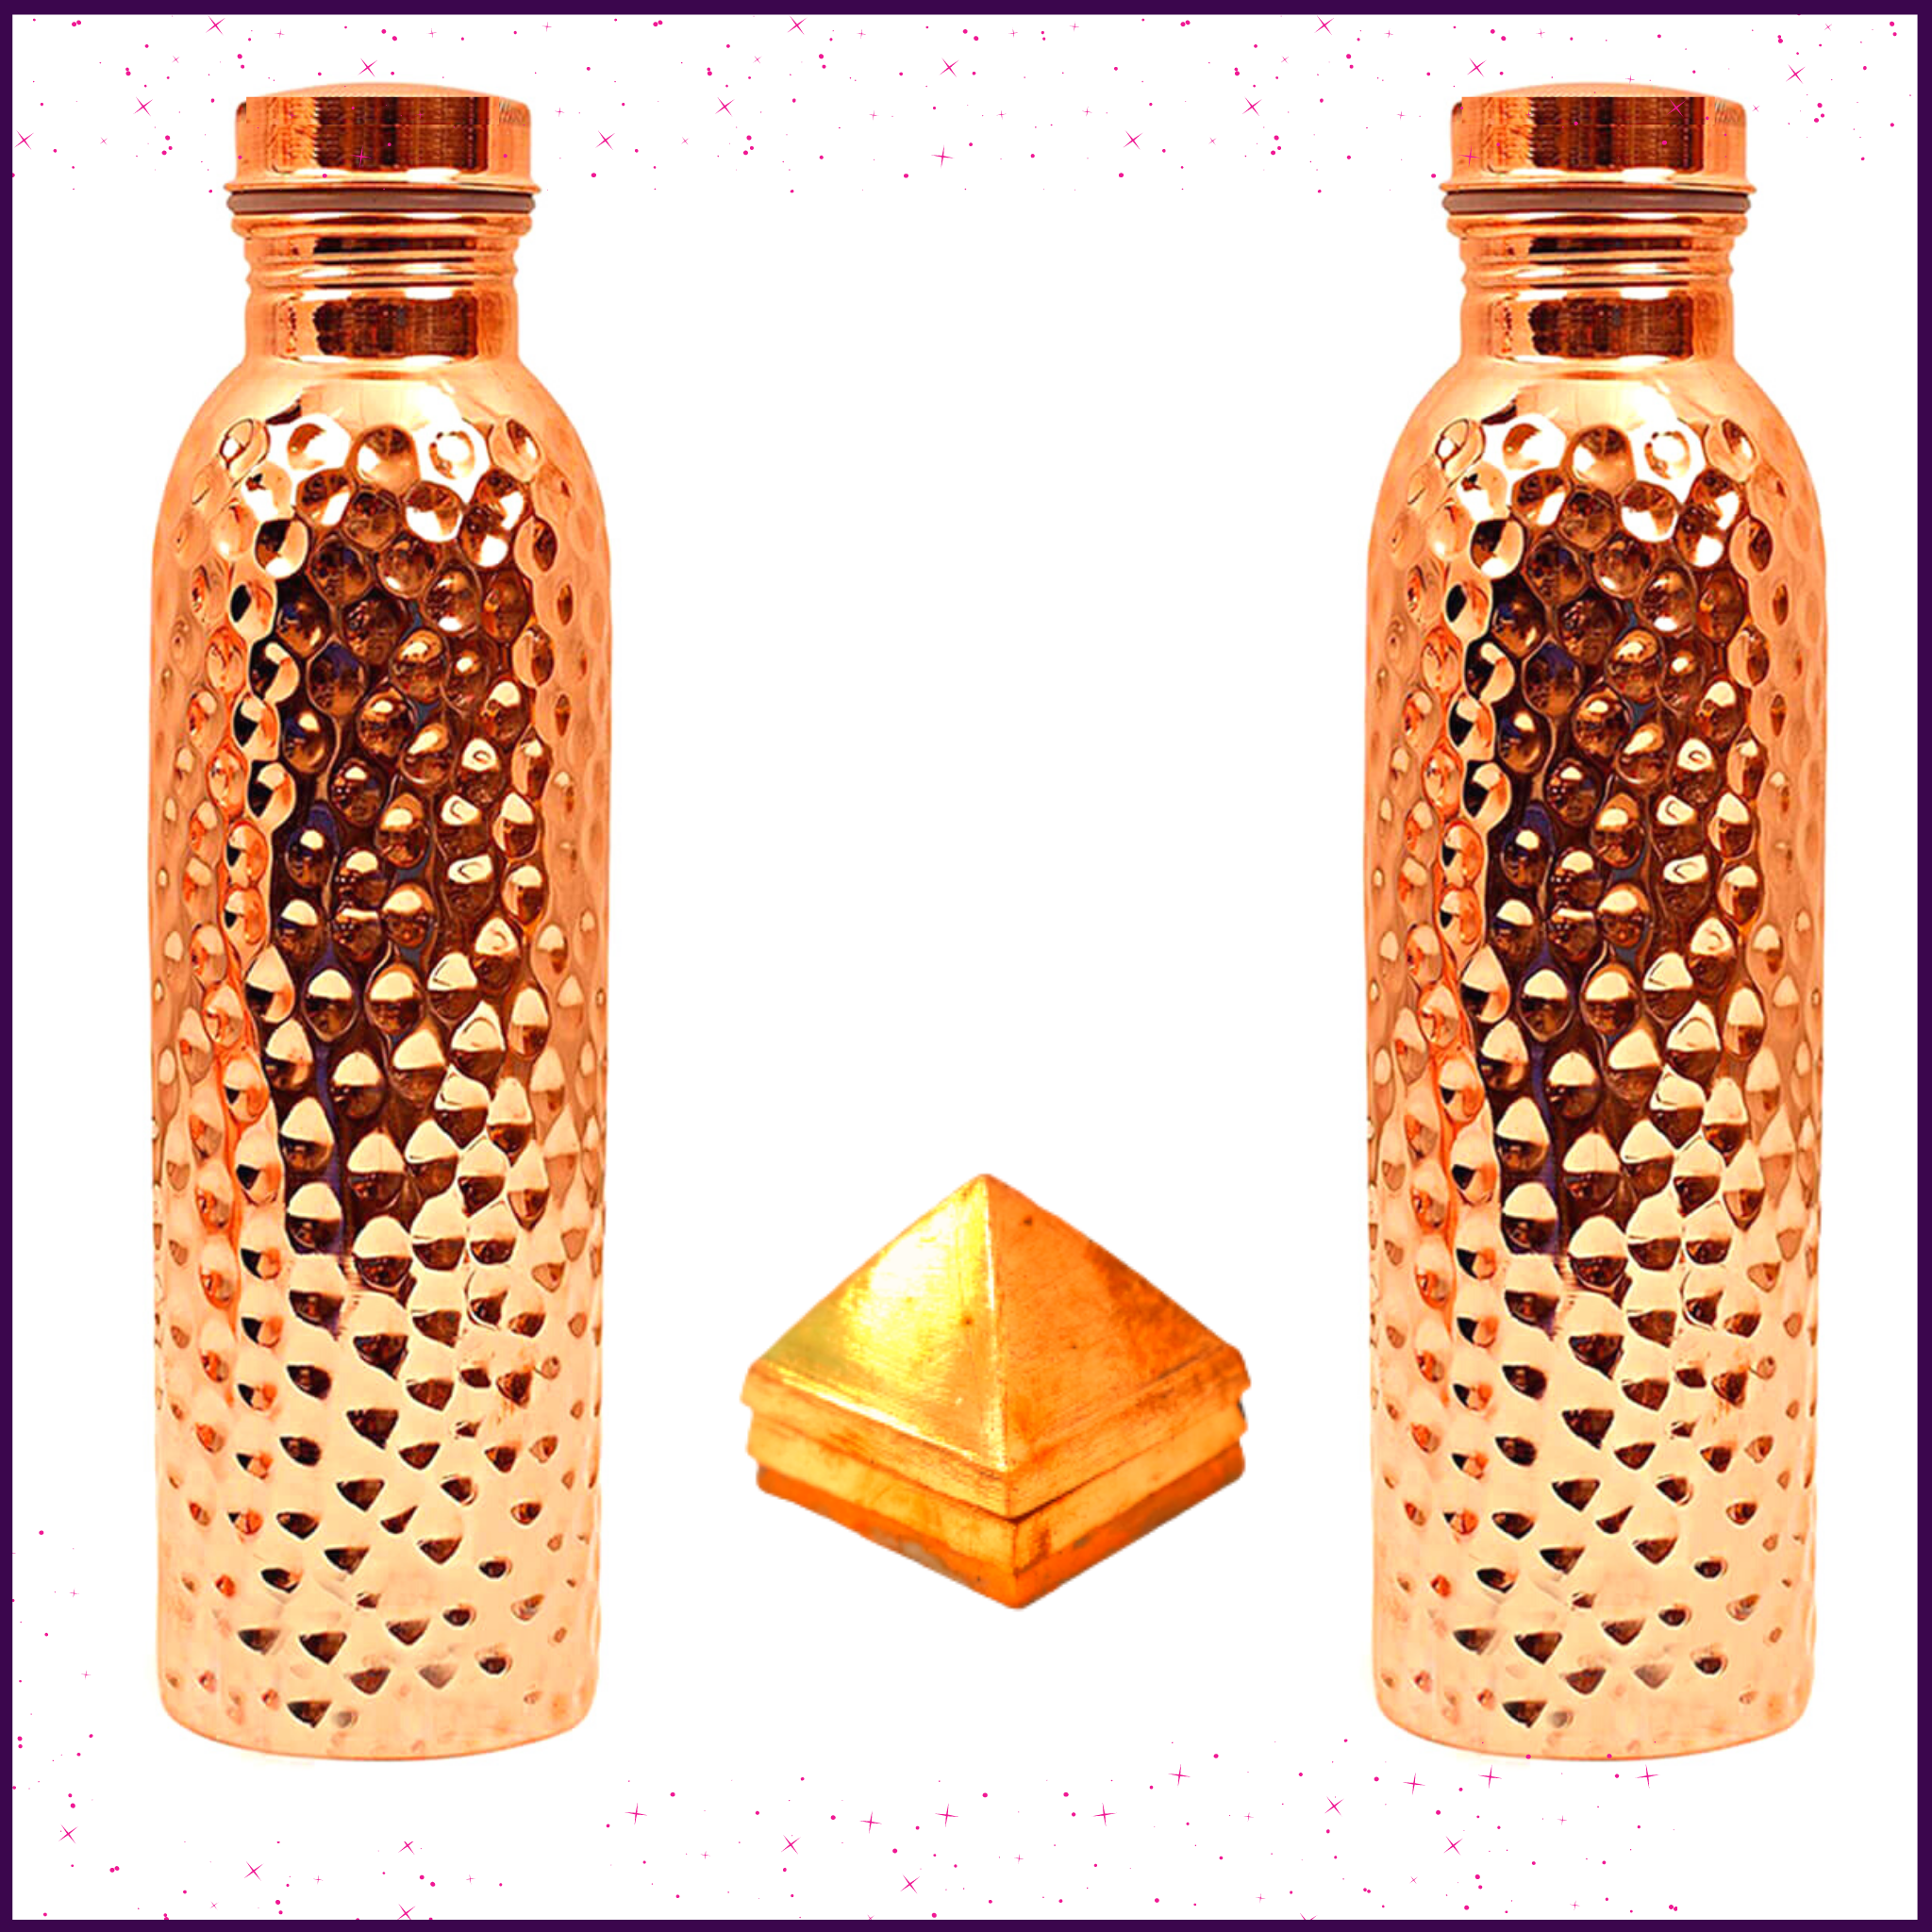 Holistic Health Combo 1: Set of 2 - 950ML Copper Hammered Bottle + 1 - 3Layer Vastu Pyramid - 51pyramids